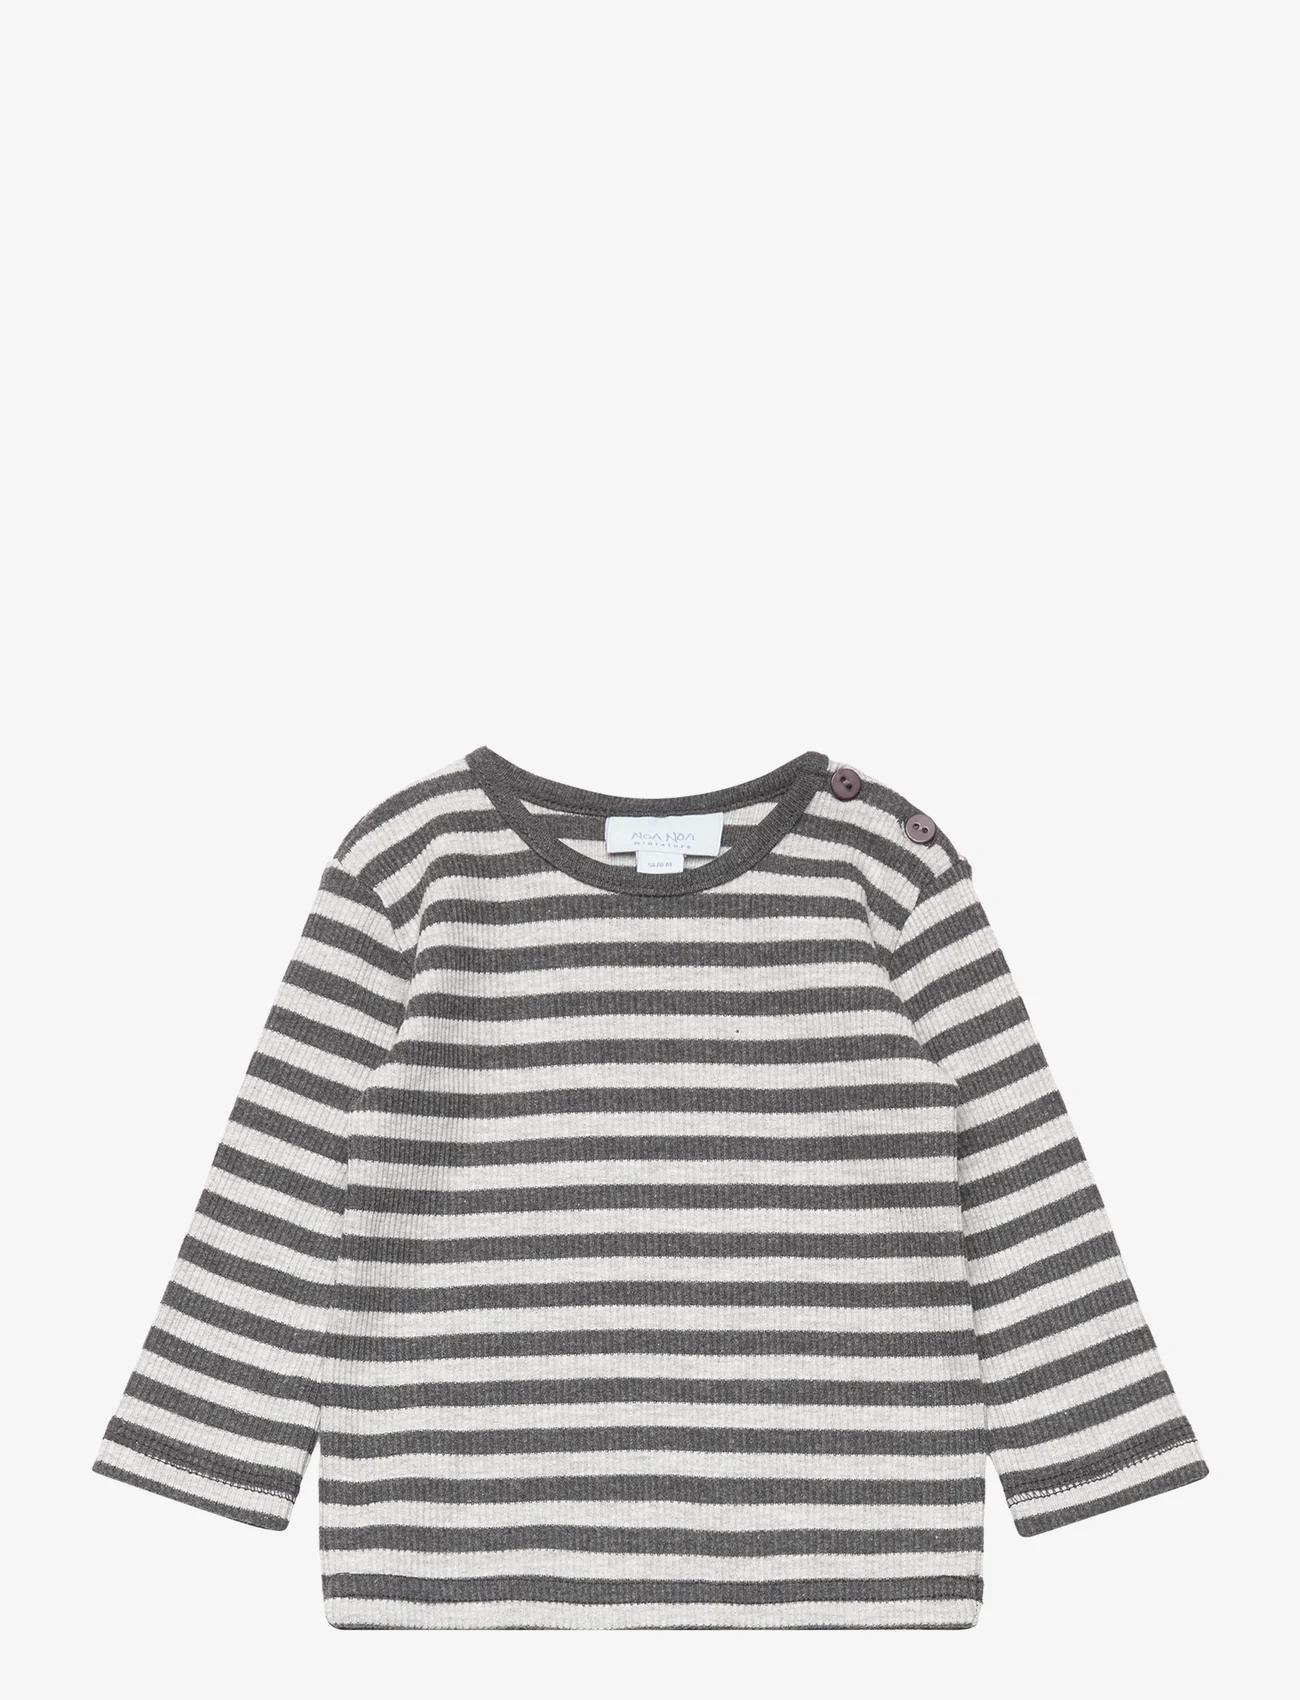 Noa Noa miniature - T-shirt - marškinėliai ilgomis rankovėmis - light/dark grey melange - 0